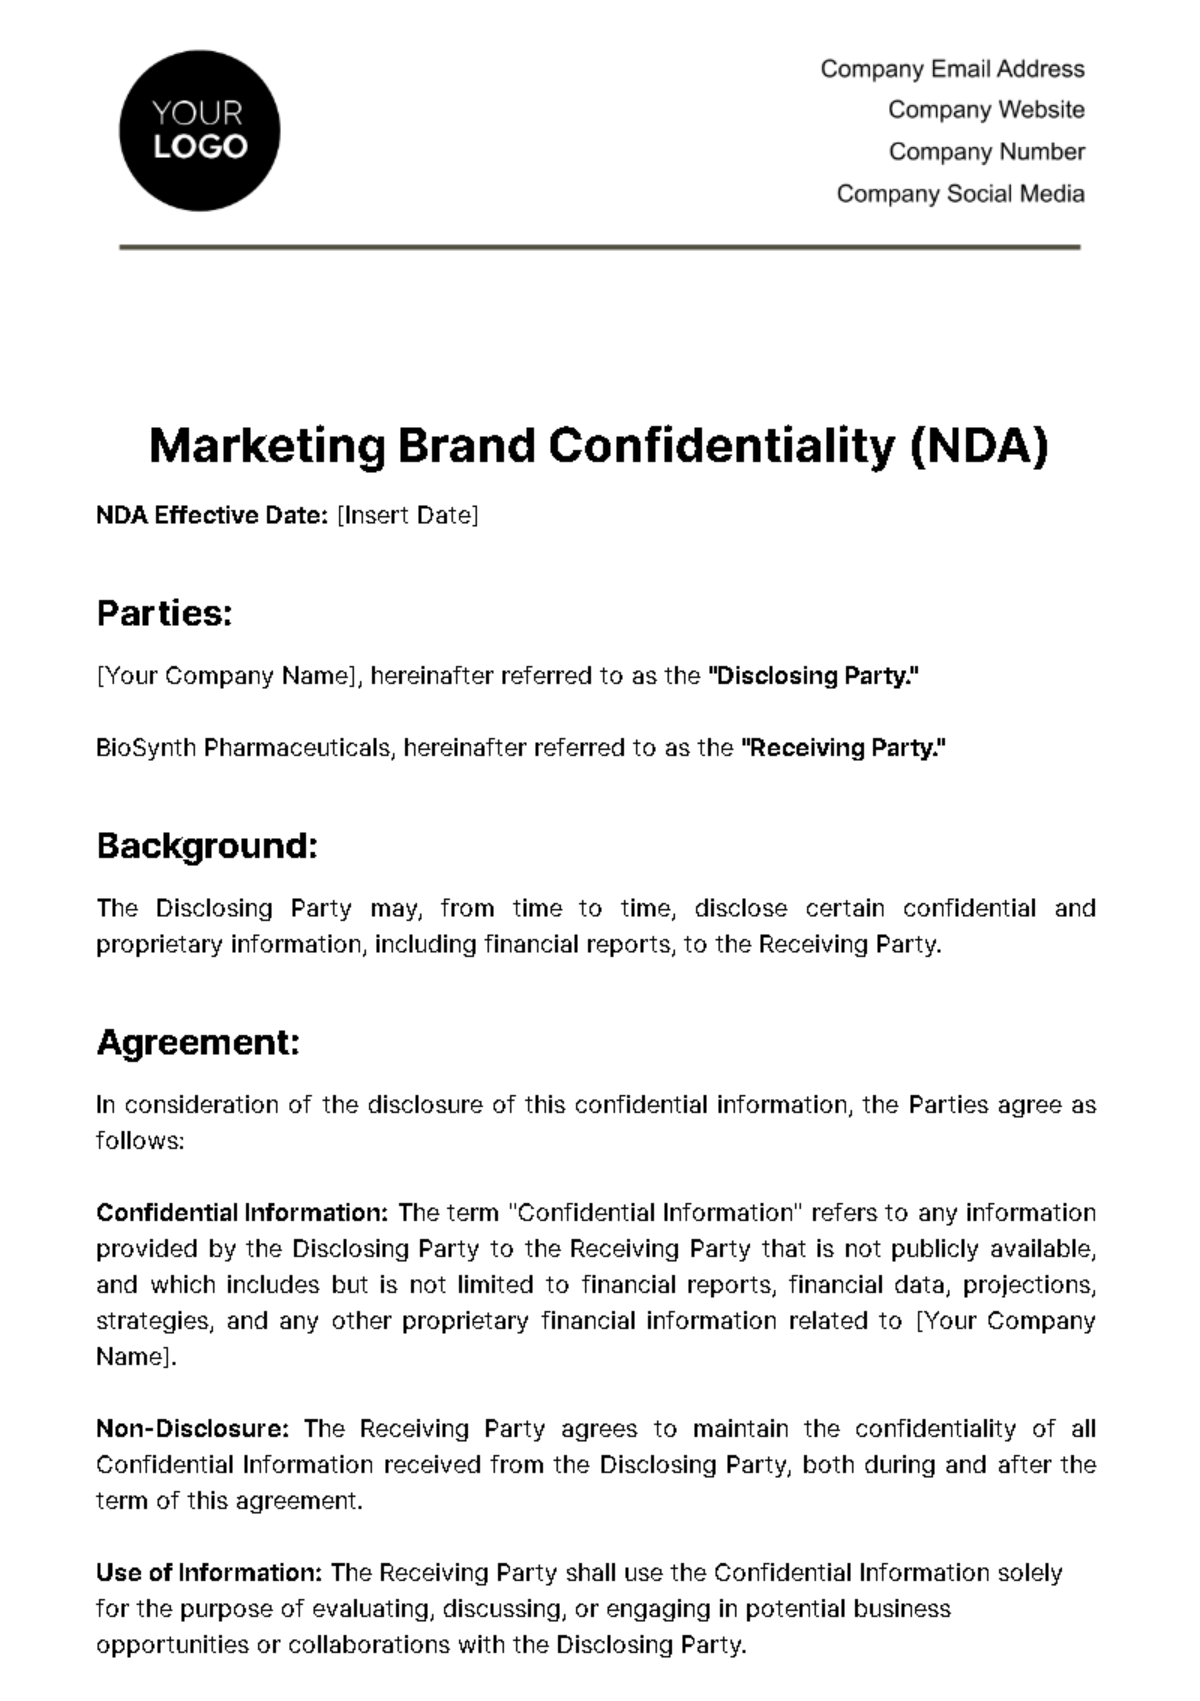 Marketing Brand Confidentiality NDA Template